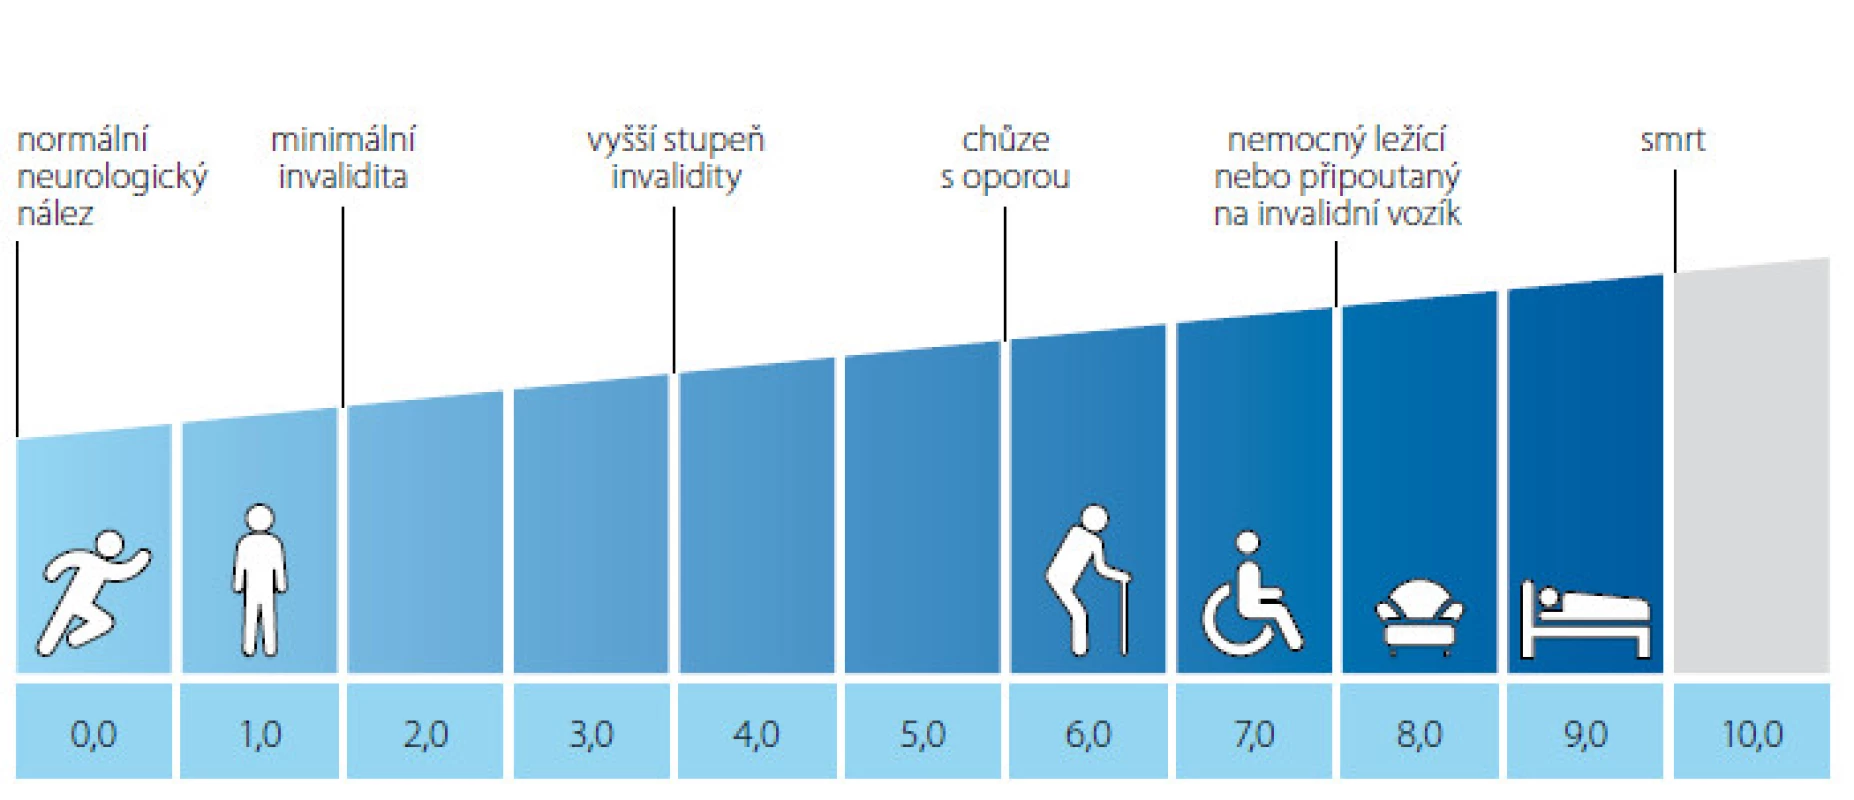 Kurtzkeho škála převzato z www.msdecisions.org.uk (3)
Fig. 1. Kurtzke Expanded Disability Status Scale (EDSS), from www.msdecisions.uk (3)